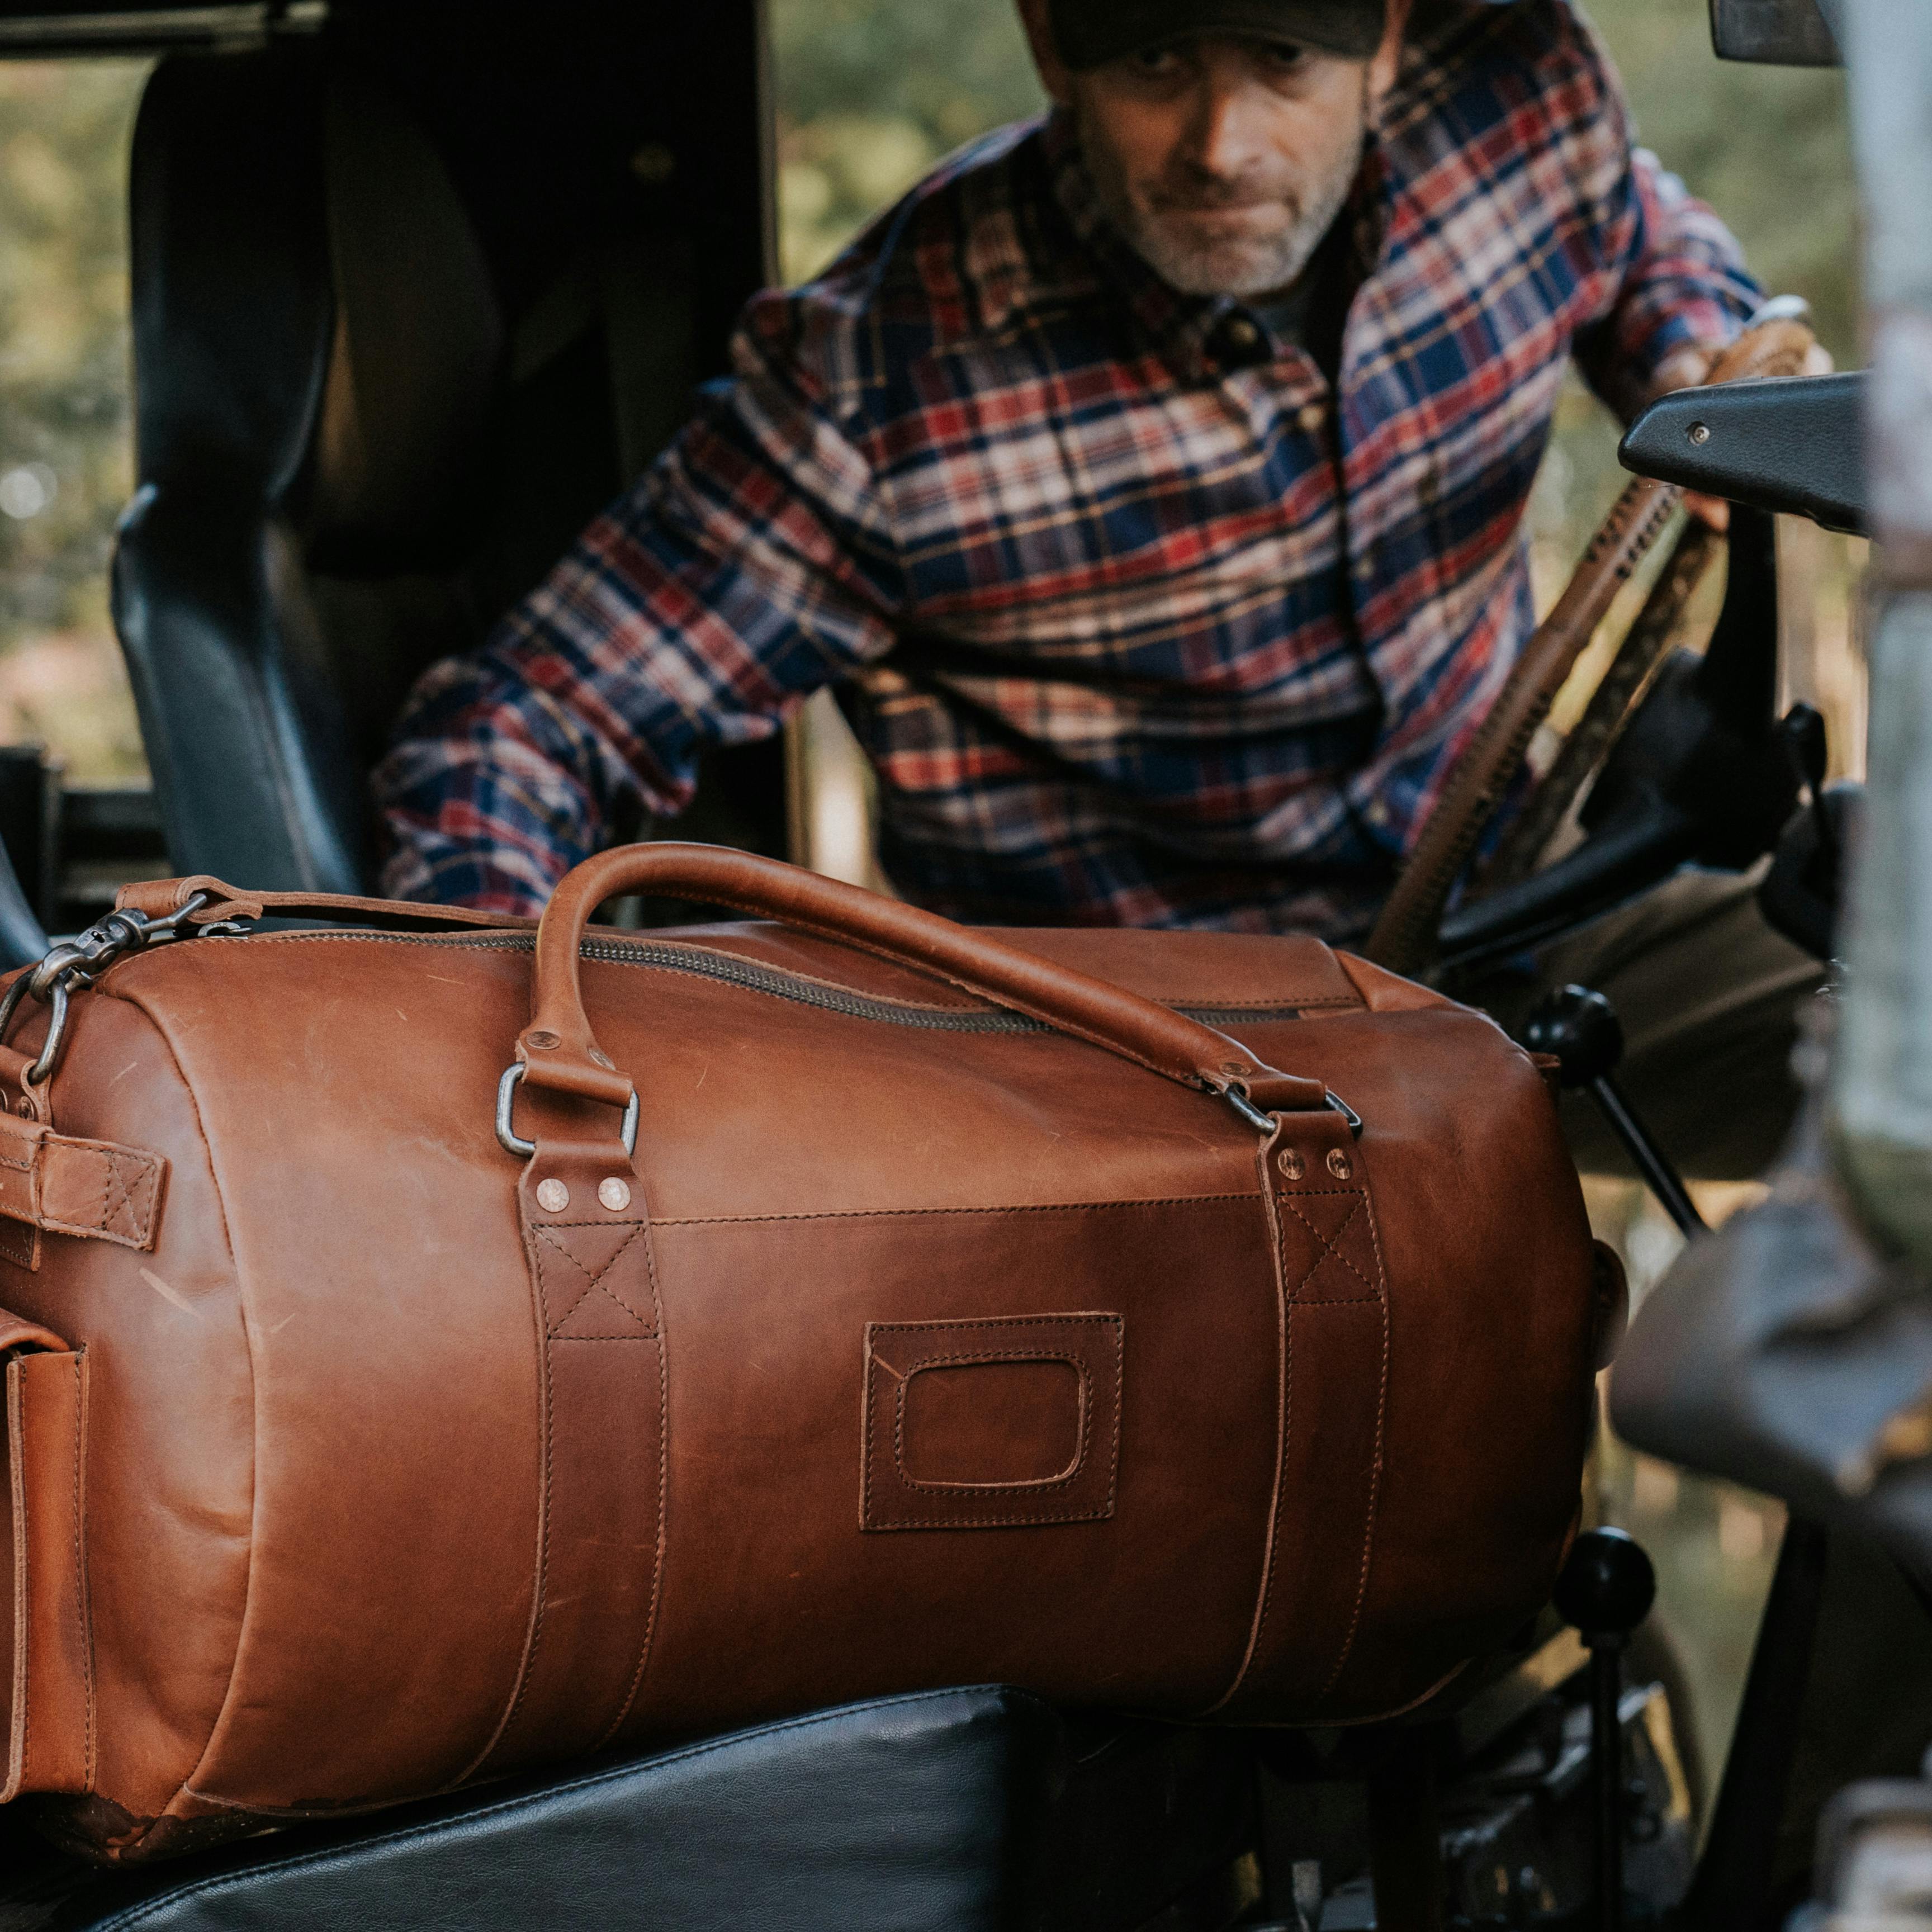 Denver Leather Travel Duffle Bag | Dark Briar